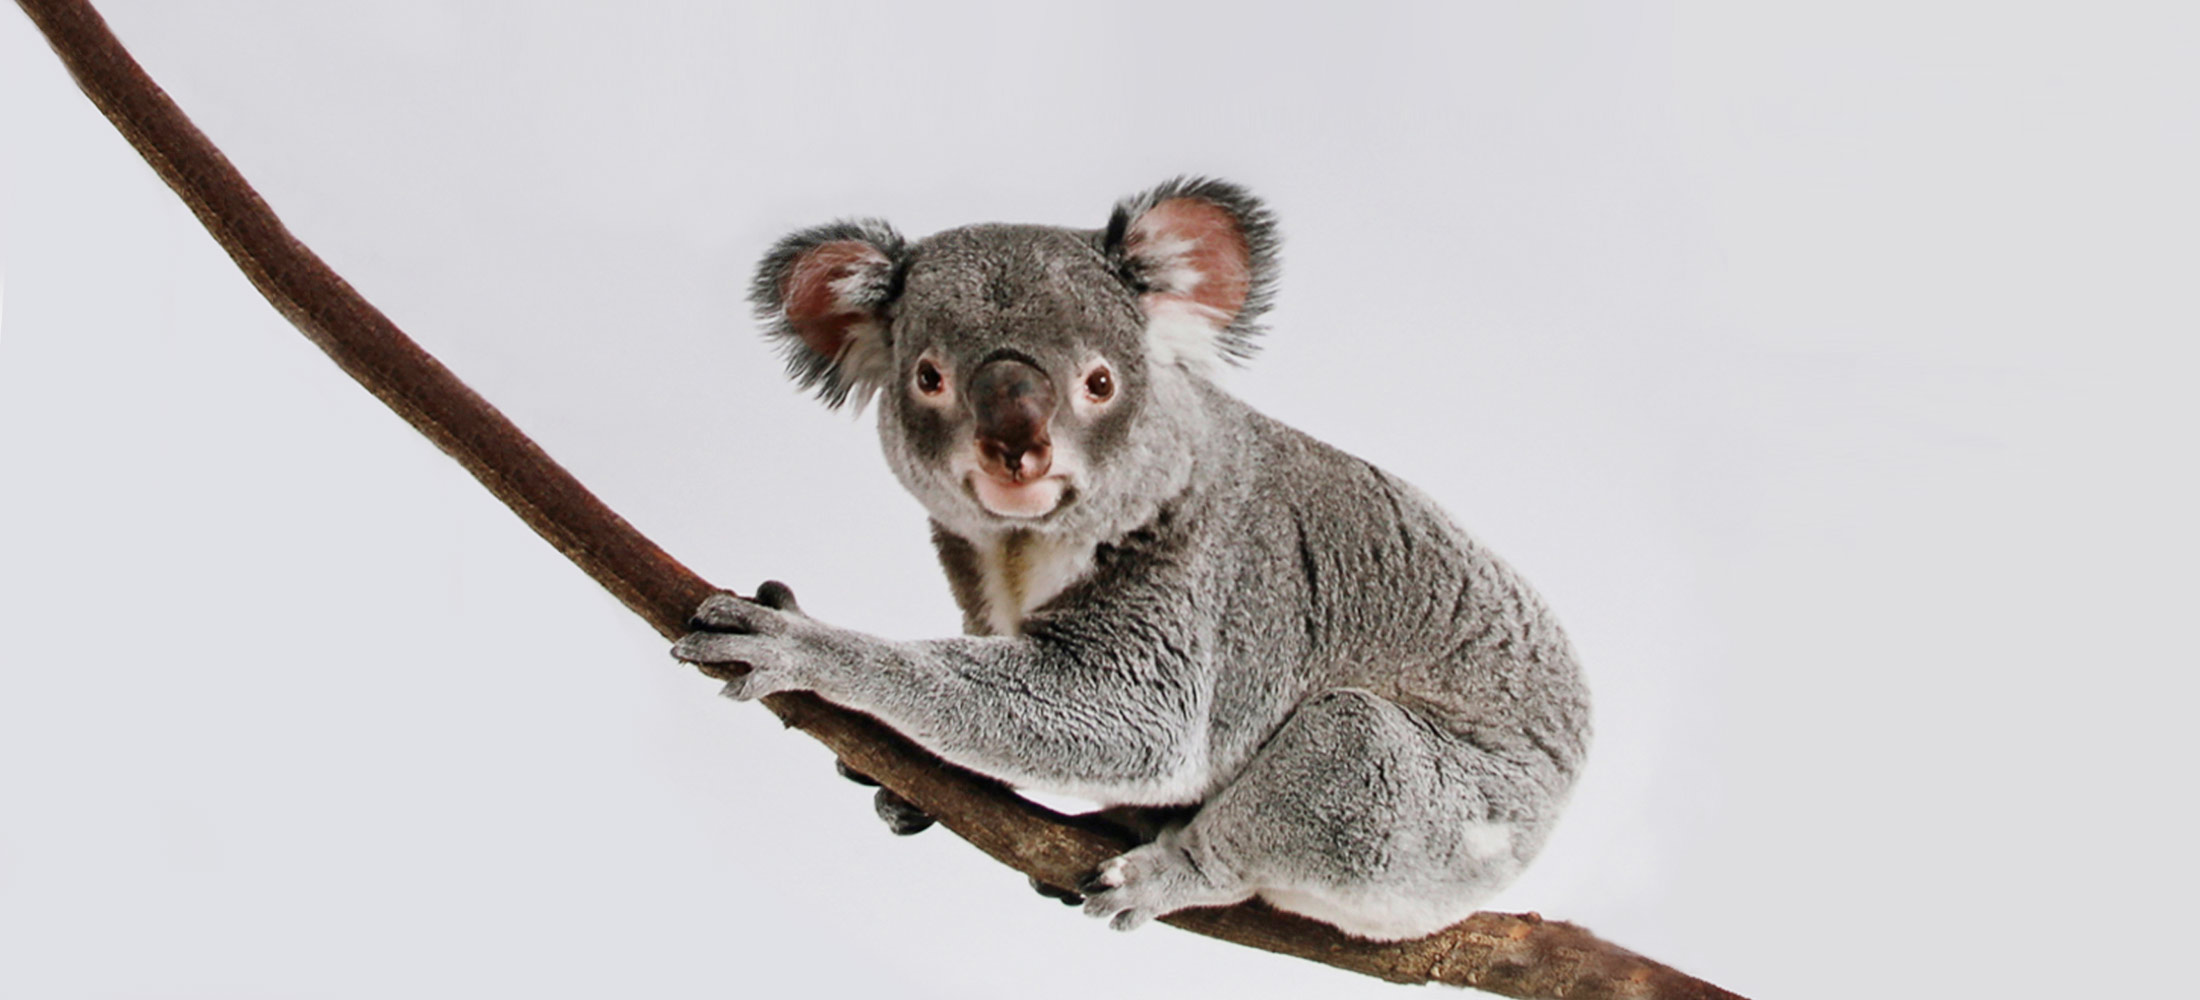 Kinderarztpraxis Dr. Bisping-Kuske Koala